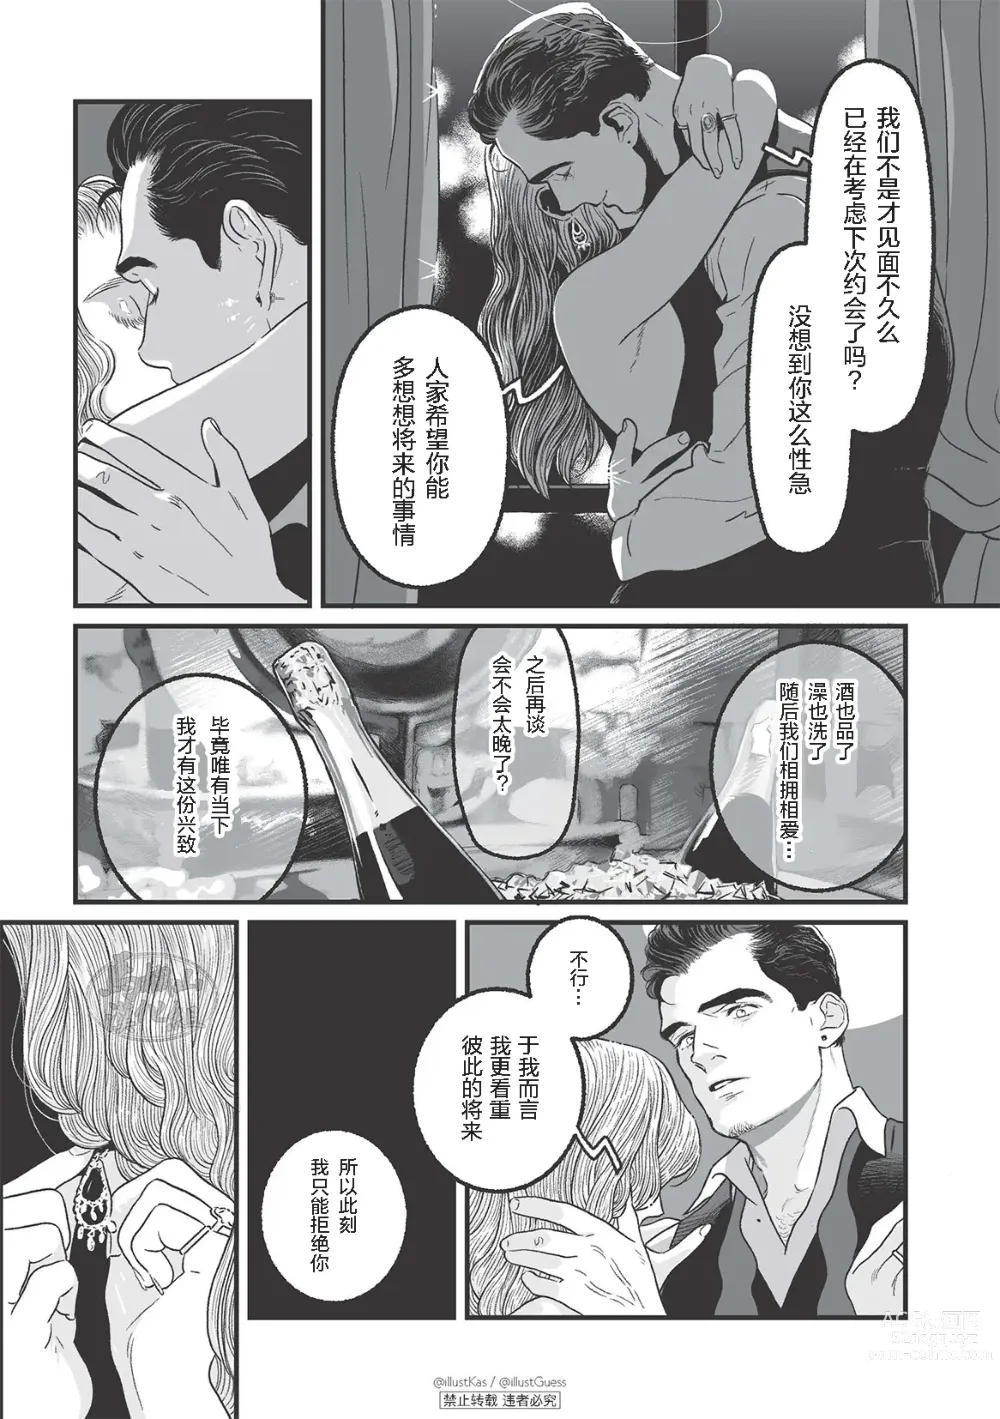 Page 6 of manga 愉悦的假日